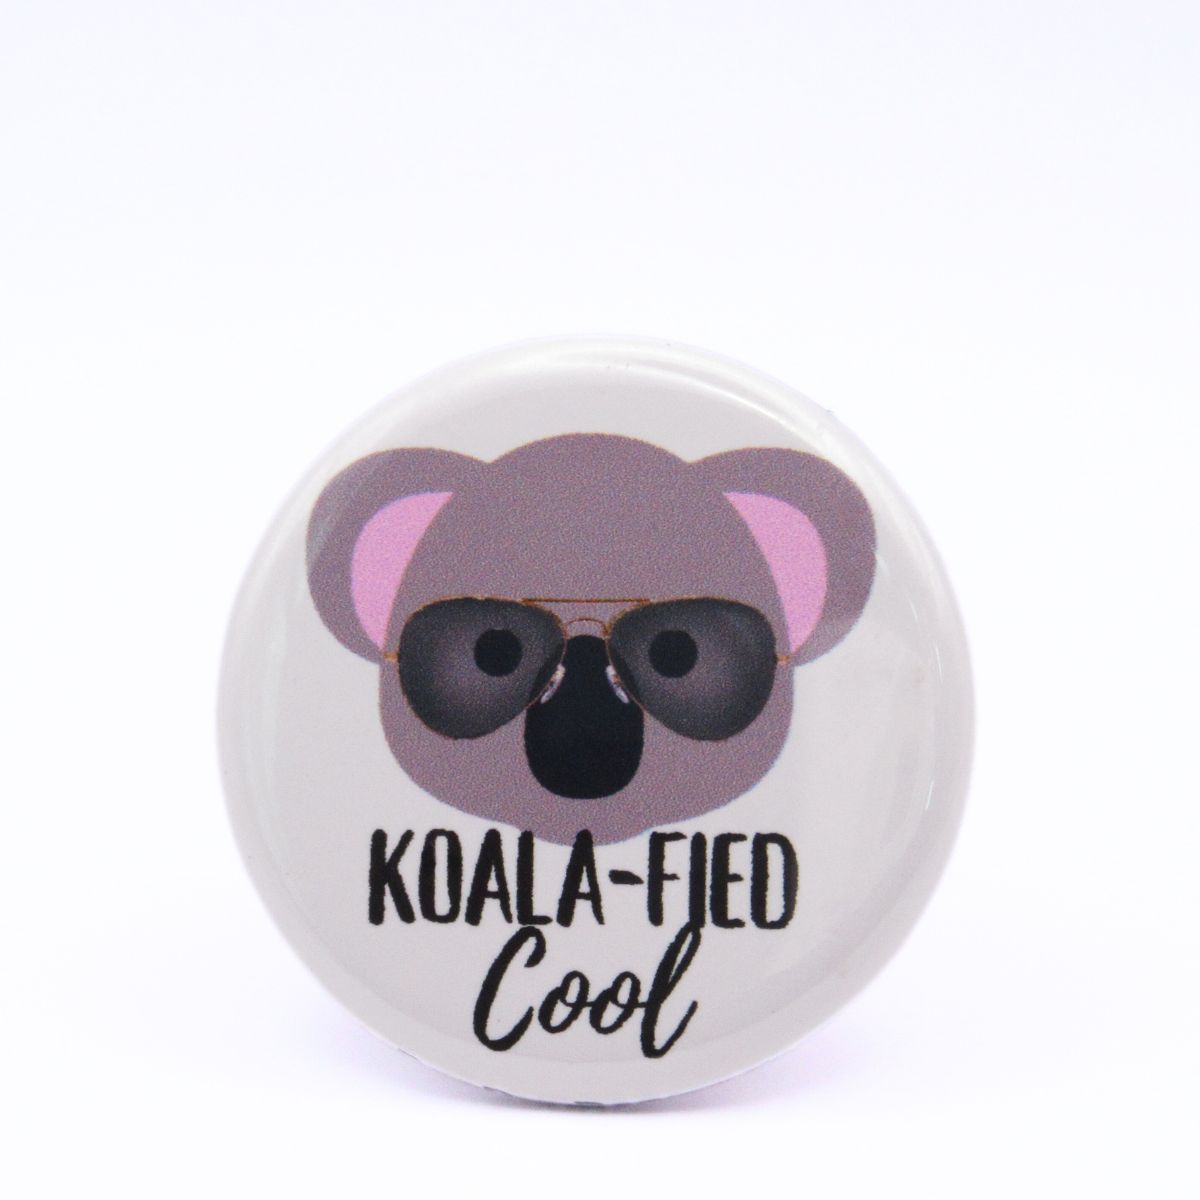 BooBooRoo Pinback Button (i.e. button, badge, pin) of the face of a koala wearing wayfarer sunglasses with the saying, "Koala-fied cool."